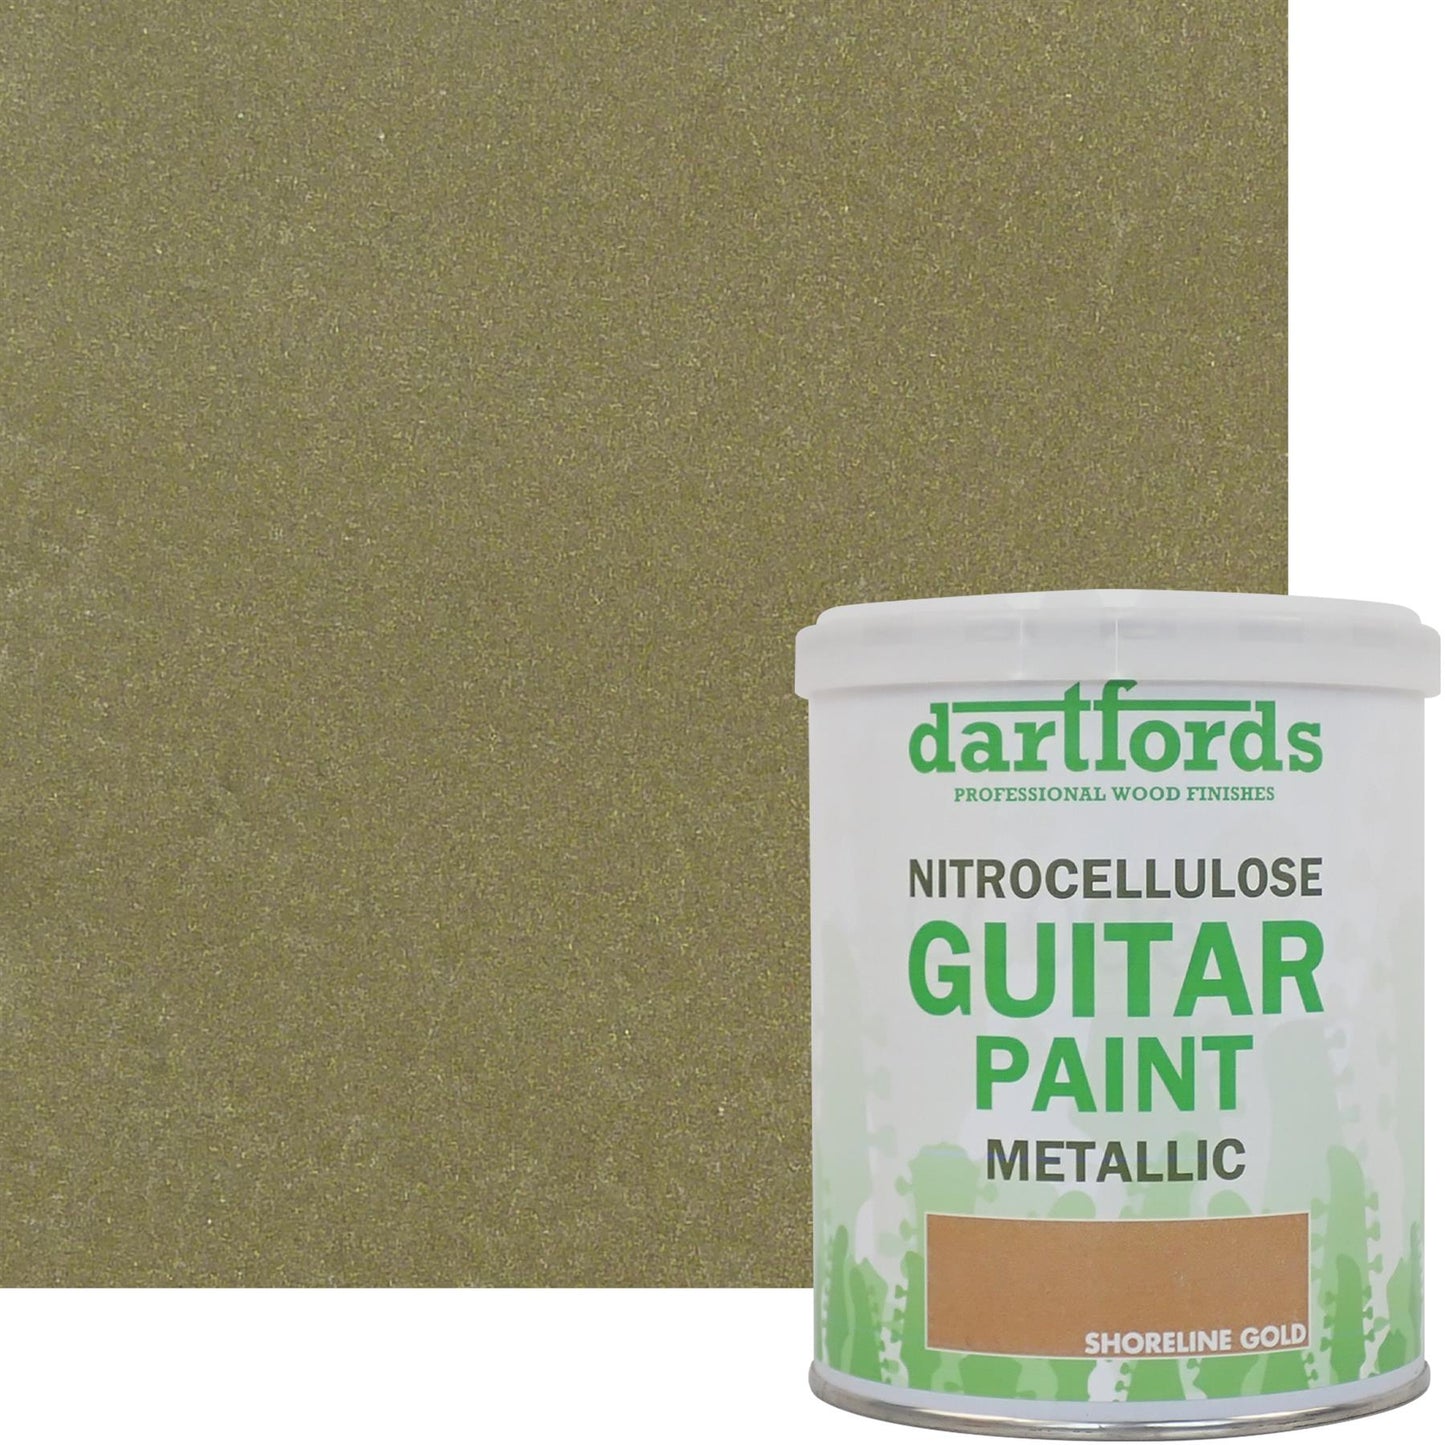 dartfords Shoreline Gold Metallic Nitrocellulose Guitar Paint - 1 litre Tin